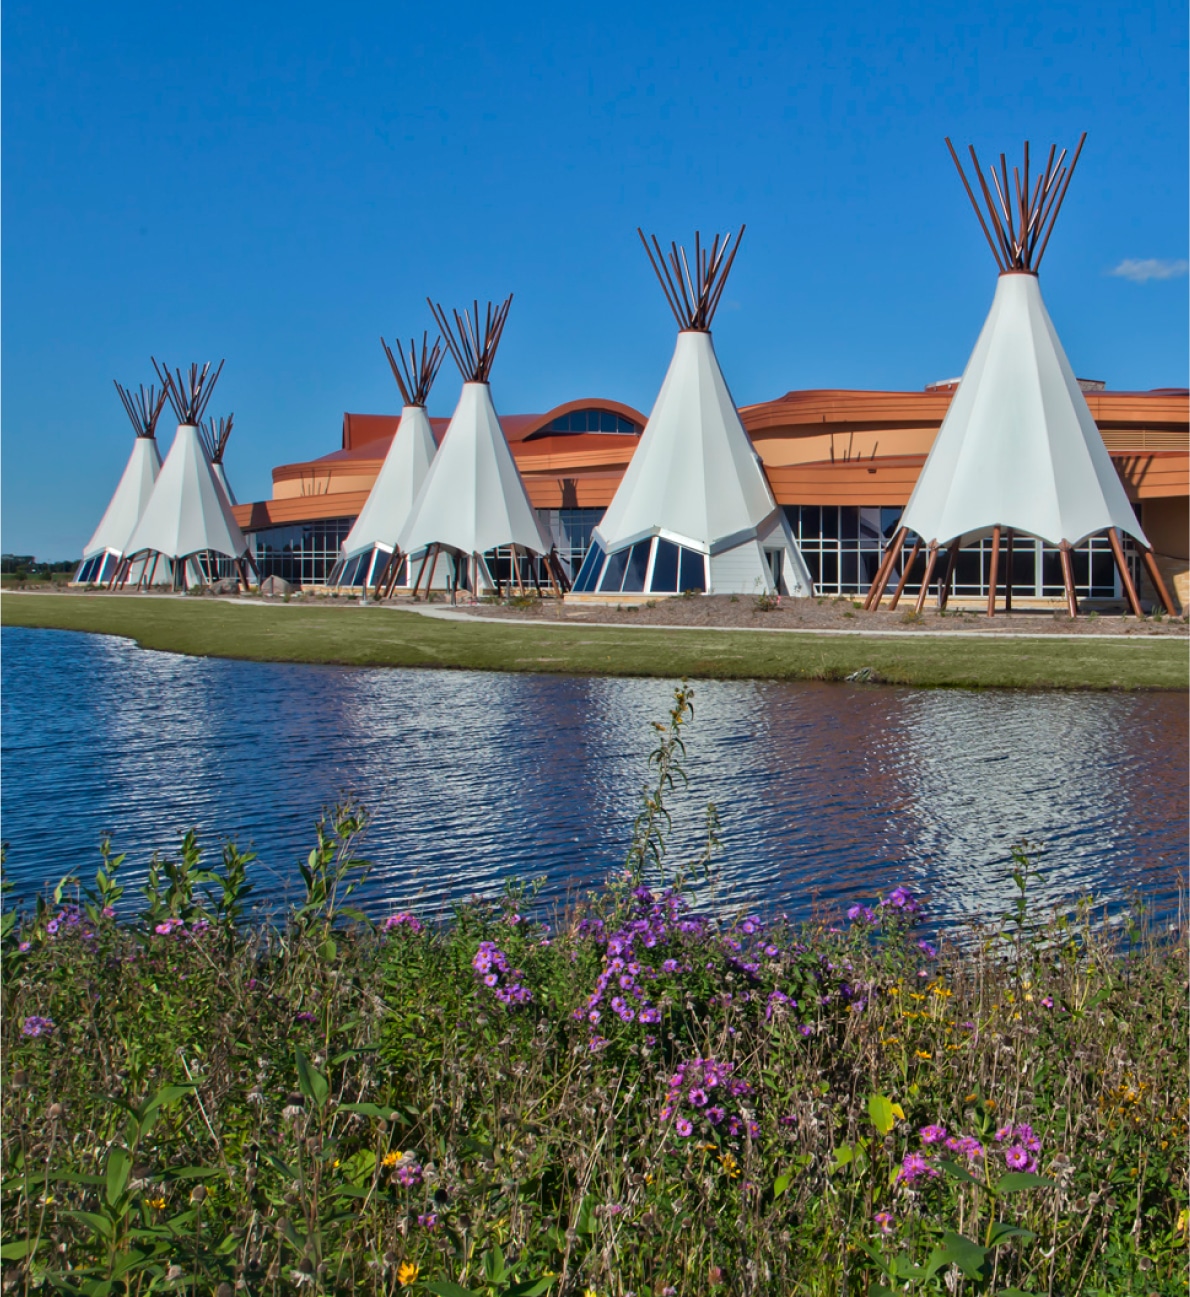 A Native American cultural center built by McGough